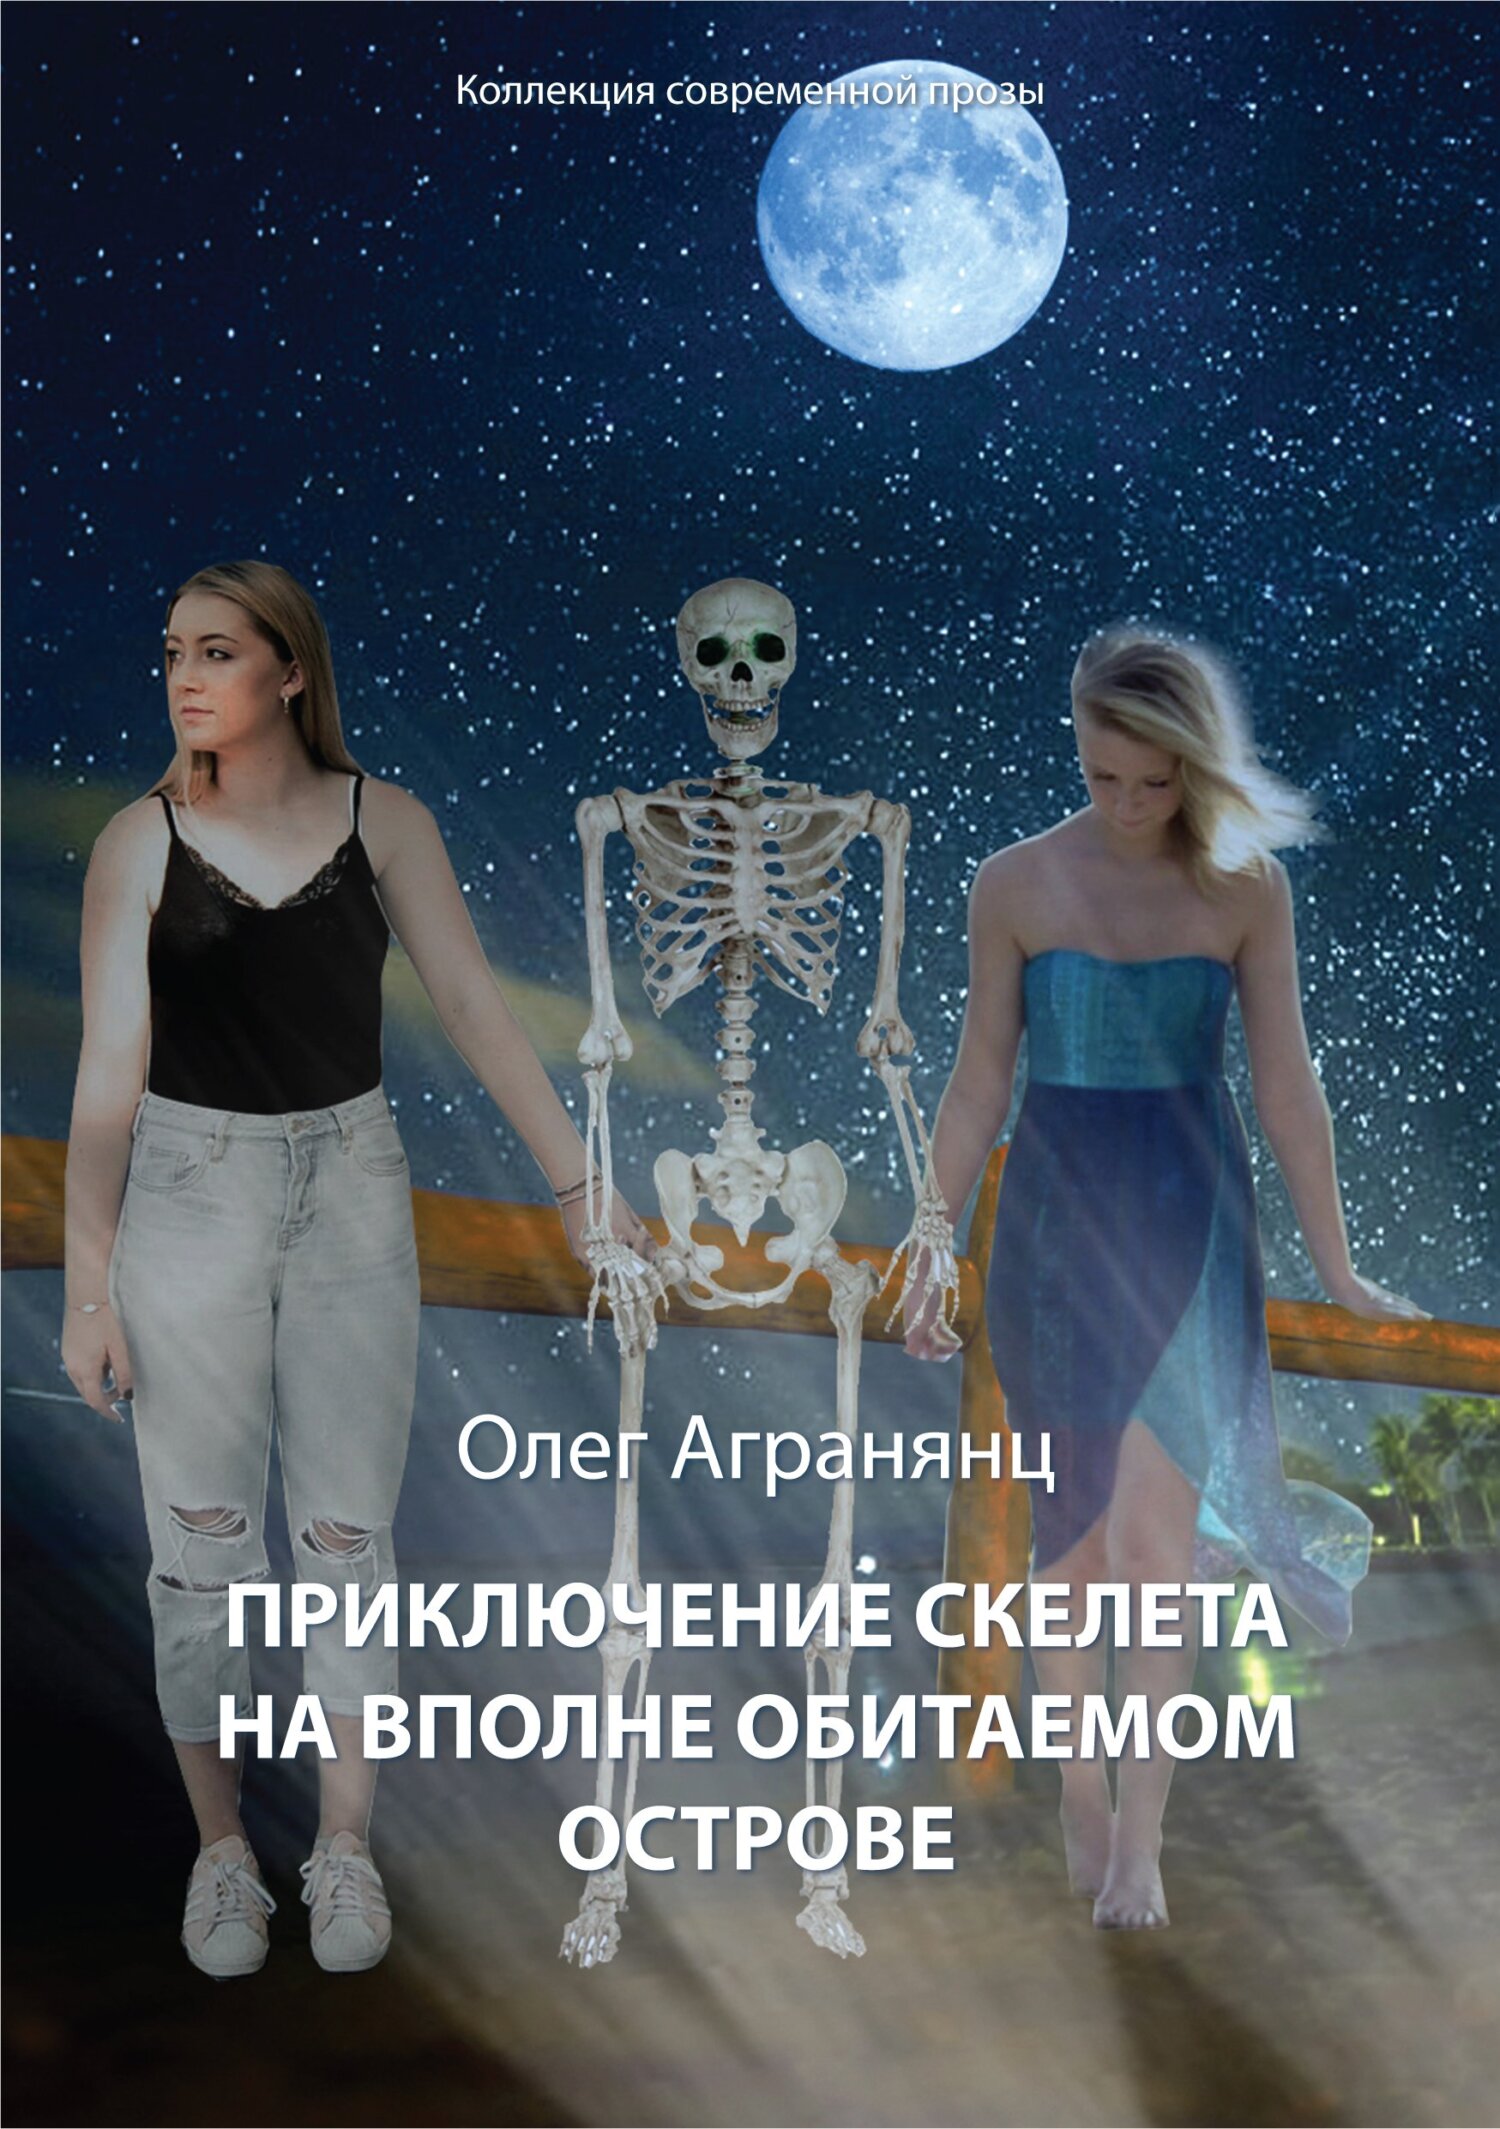 Приключение скелета на вполне обитаемом острове - Олег Сергеевич Агранянц